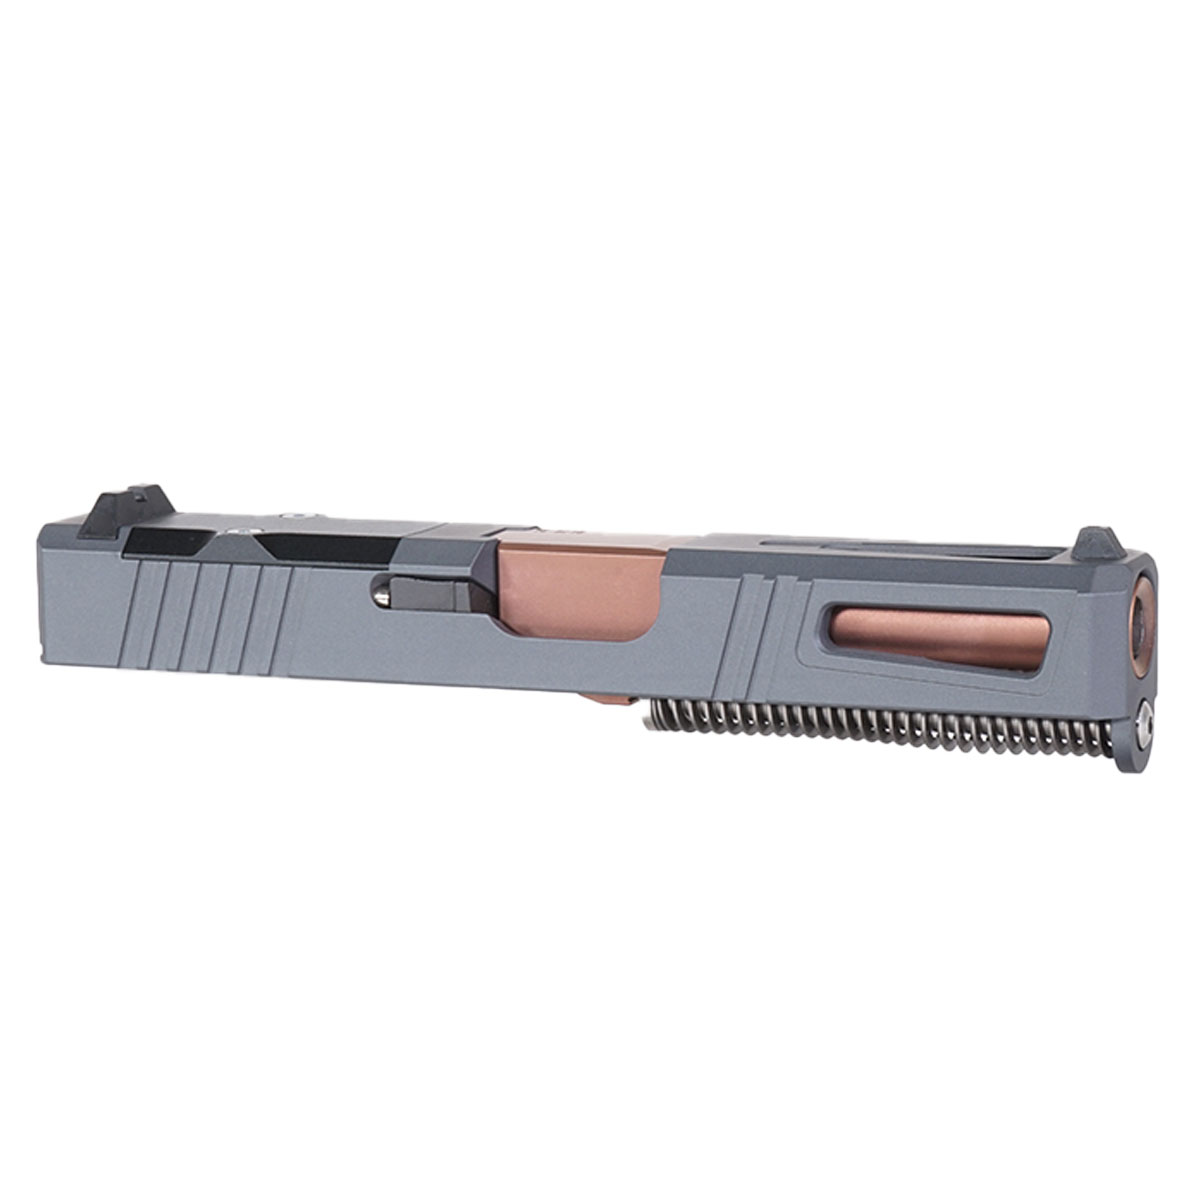 OTD 'Bronzesmith' 9mm Complete Slide Kit - Glock 19 Gen 1-3 Compatible